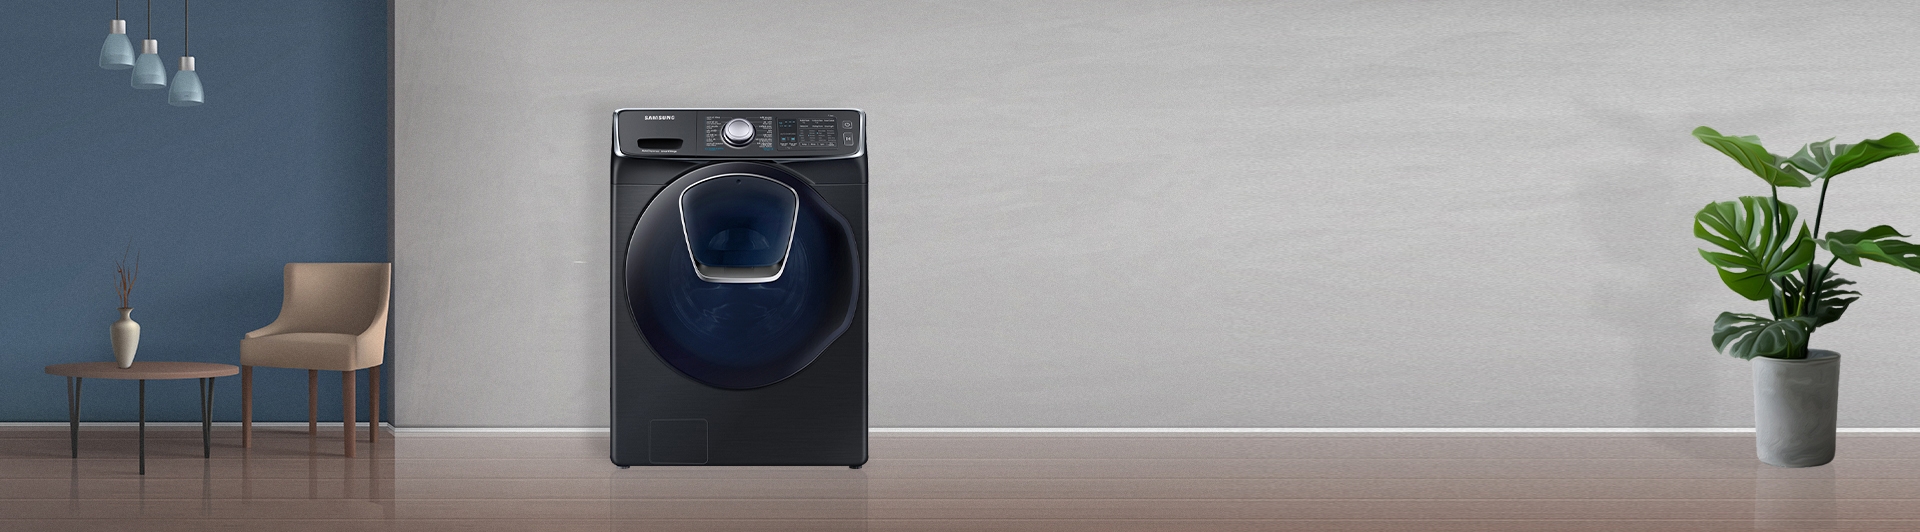 Máy giặt sấy Samsung Inverter 19 kg WD19N8750KV/SV